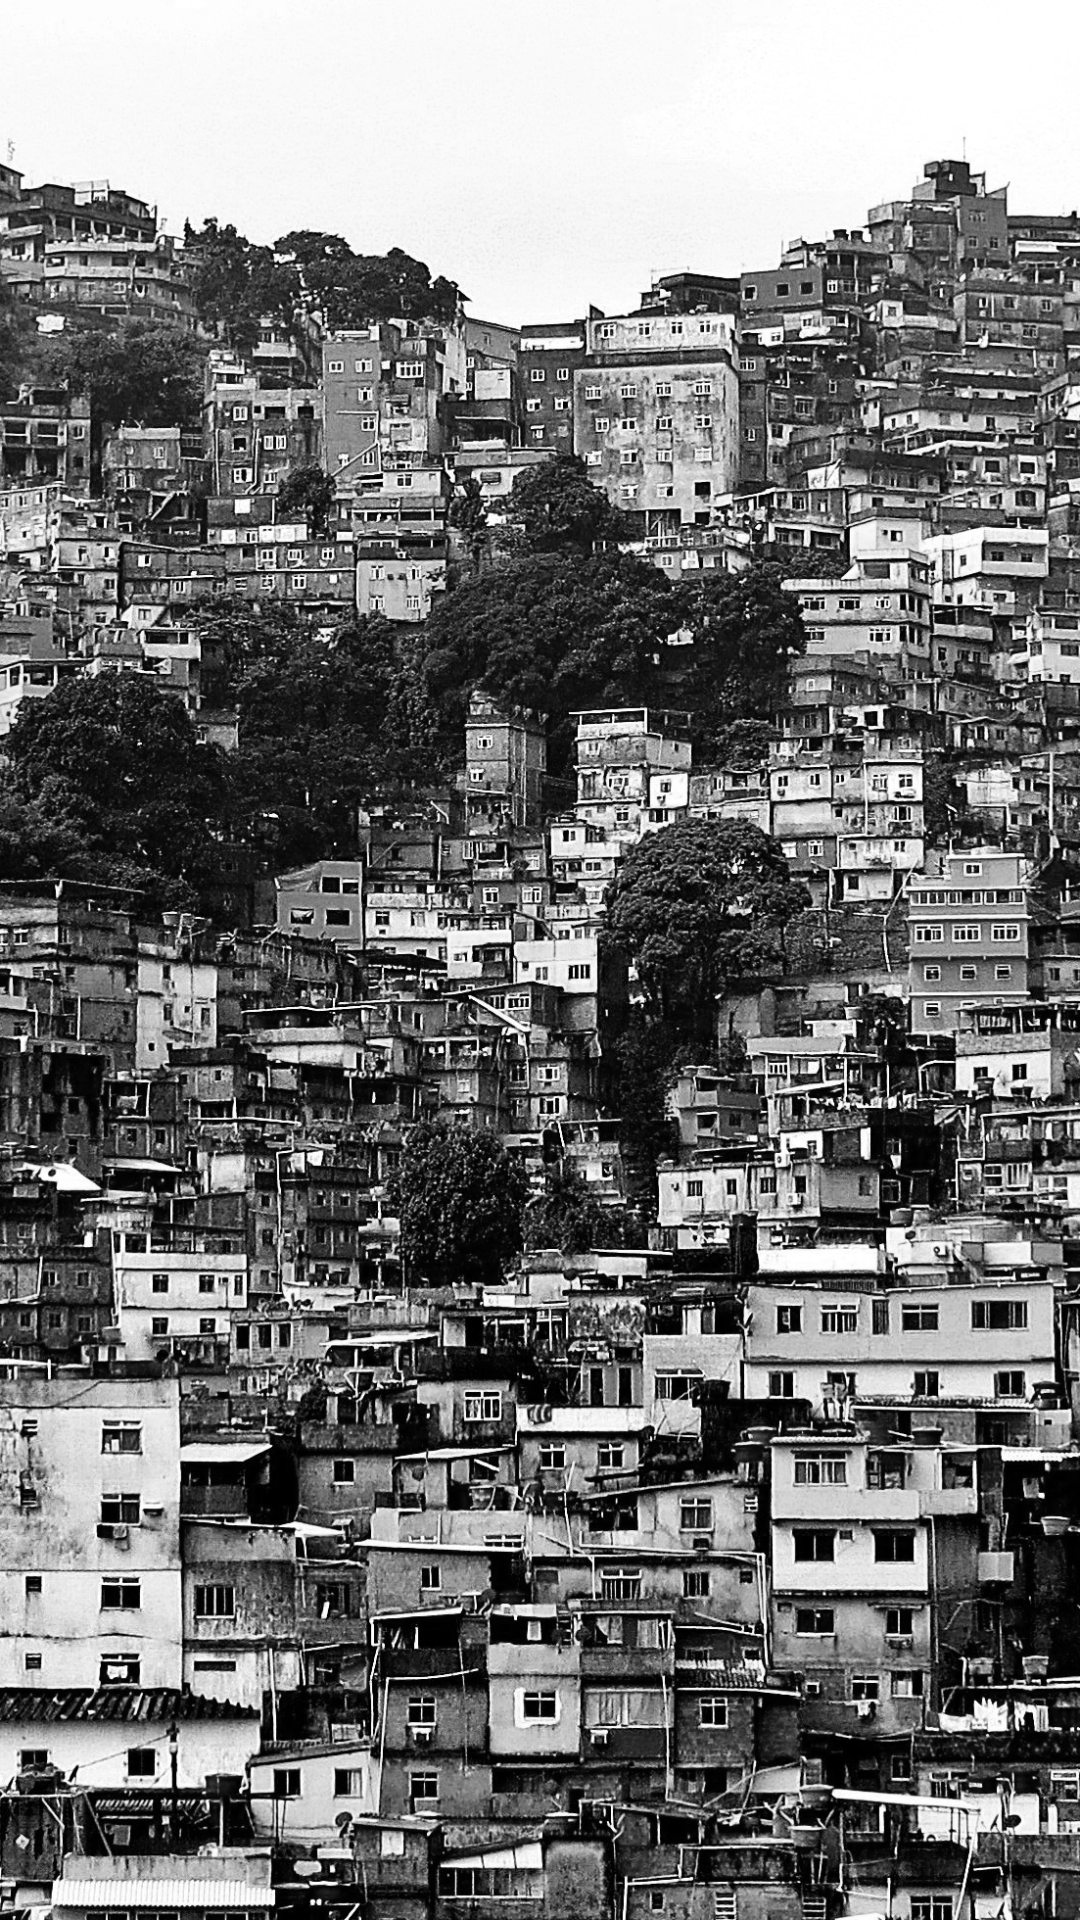 Slums in Favela, Brazil